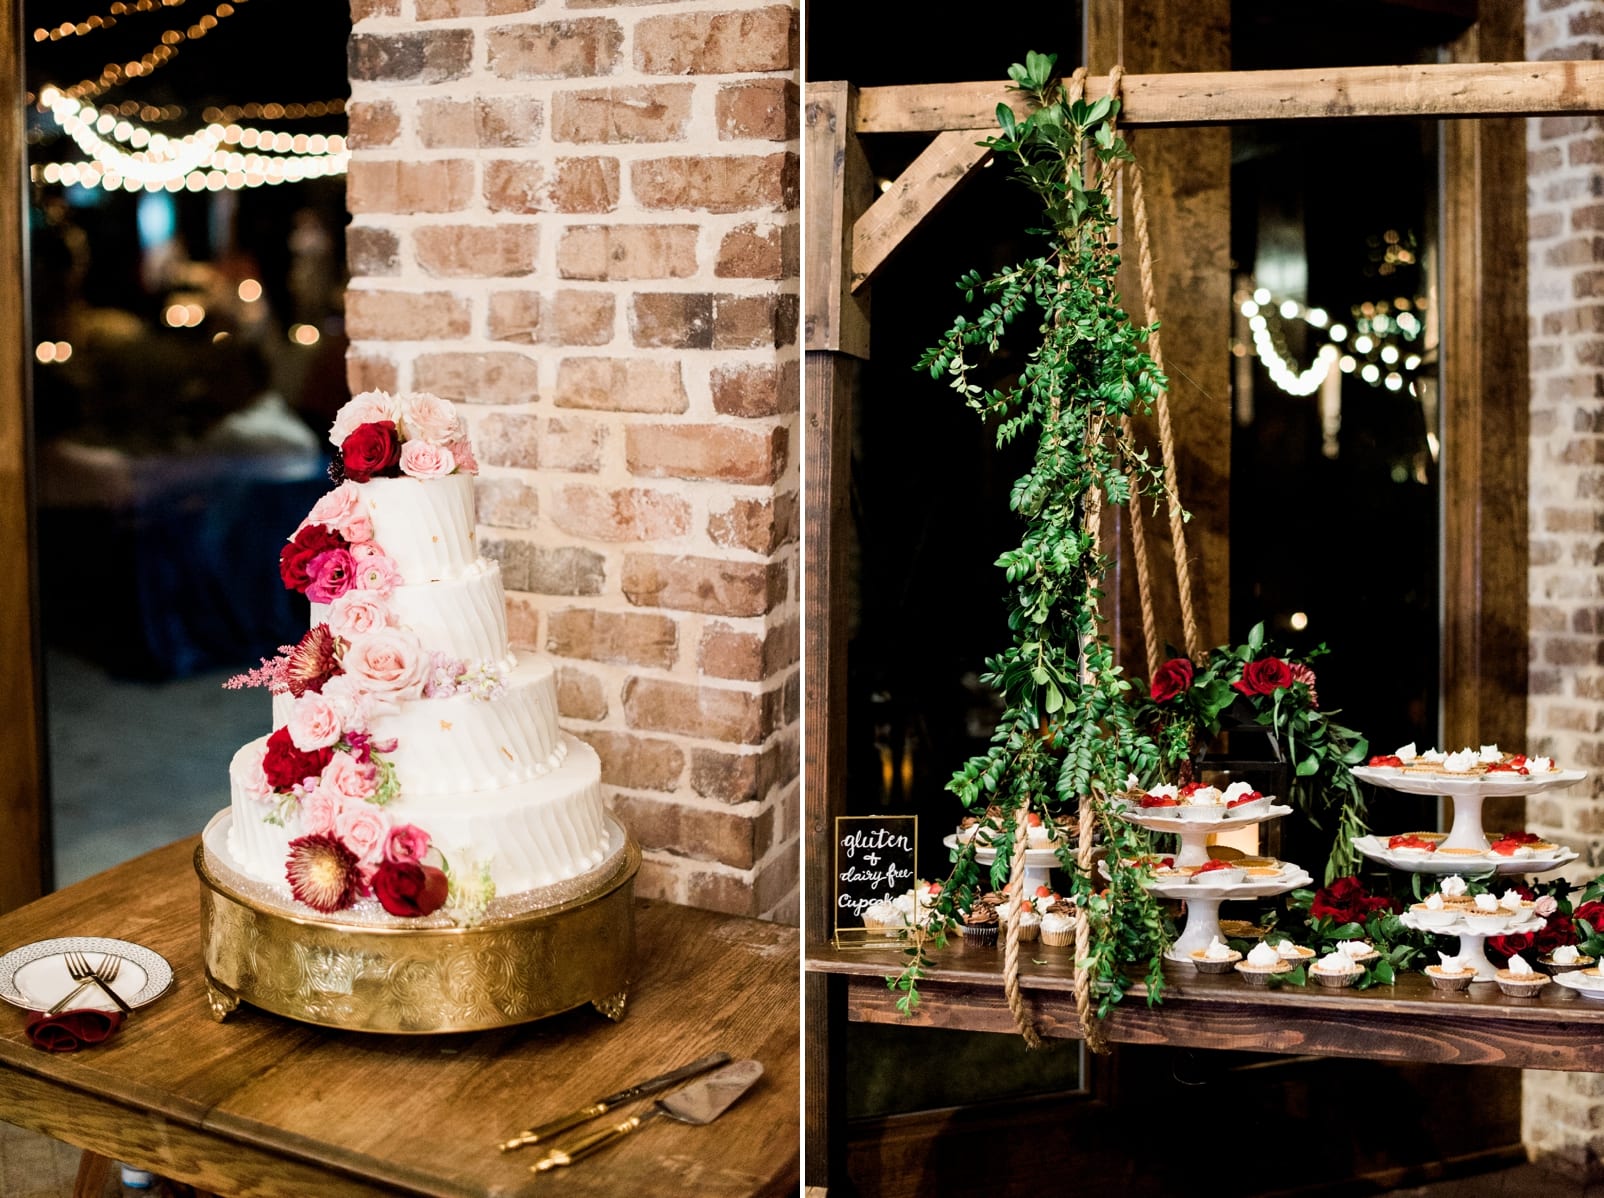 sutherland estate wedding photographer wedding cake with flowers inspiration hanging table at wedding dessert table inspiration photo